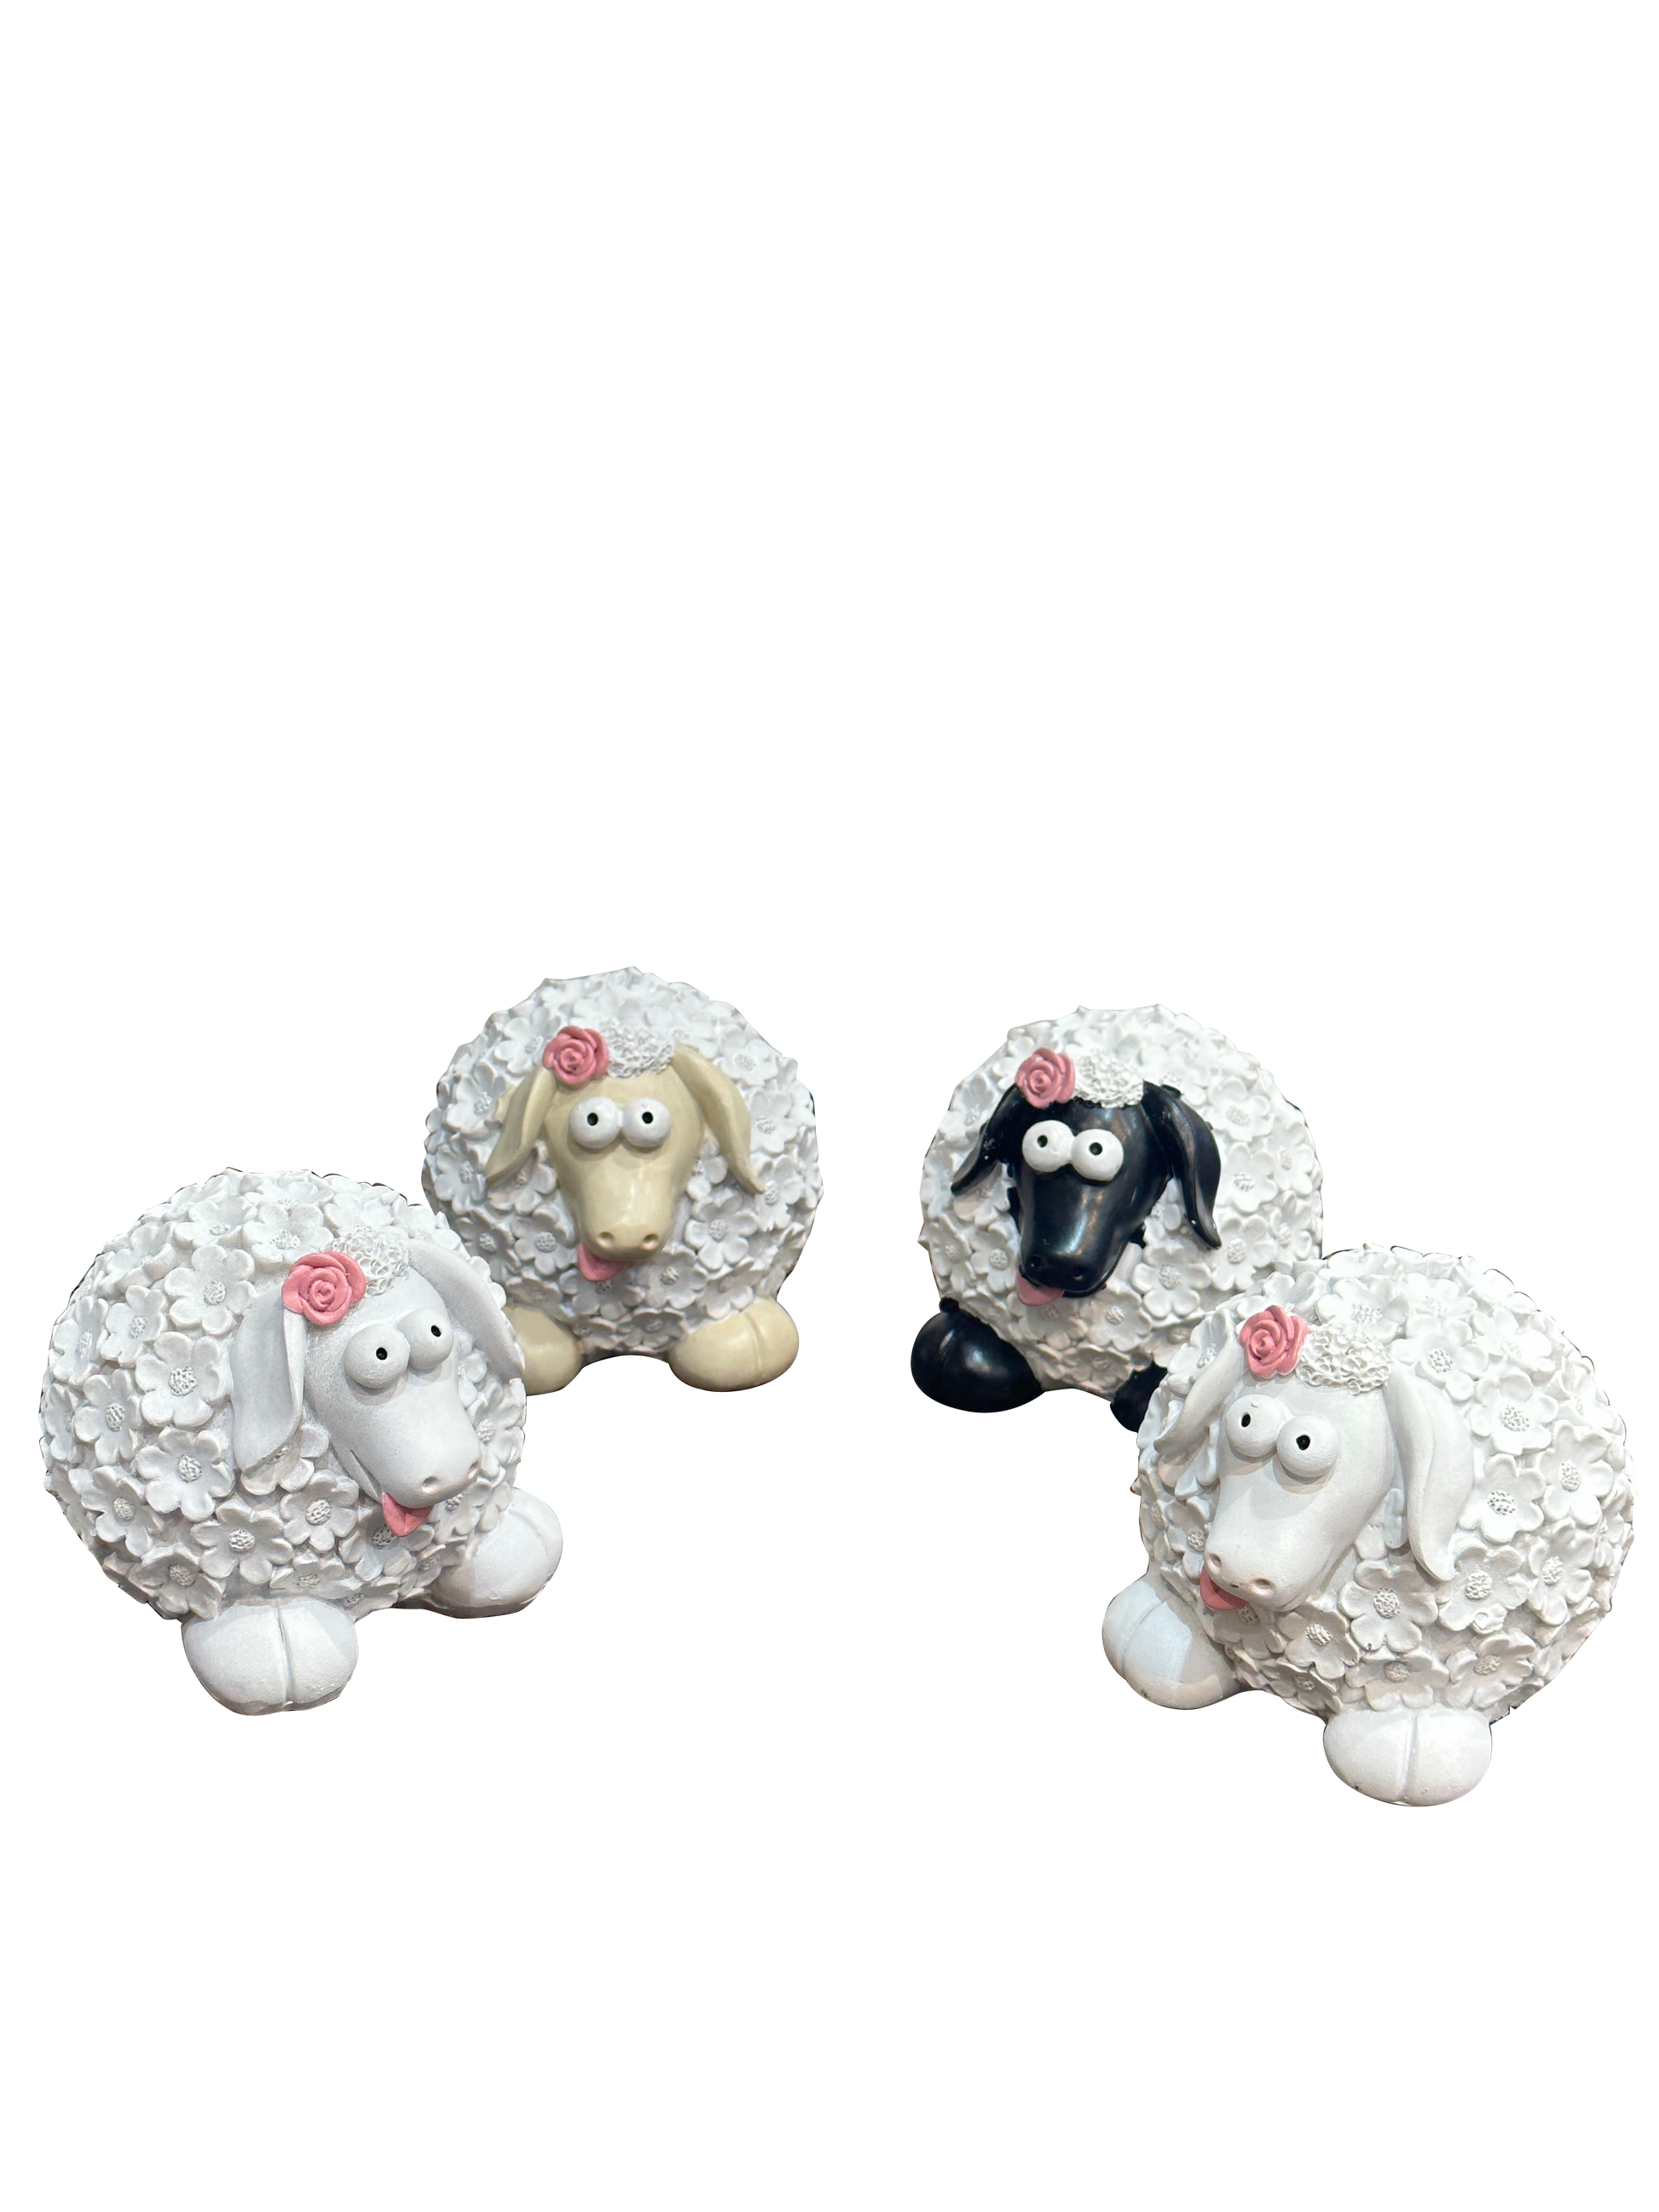 Cartoonic White Sheep (Set of 4) - Sunset Gifts Store